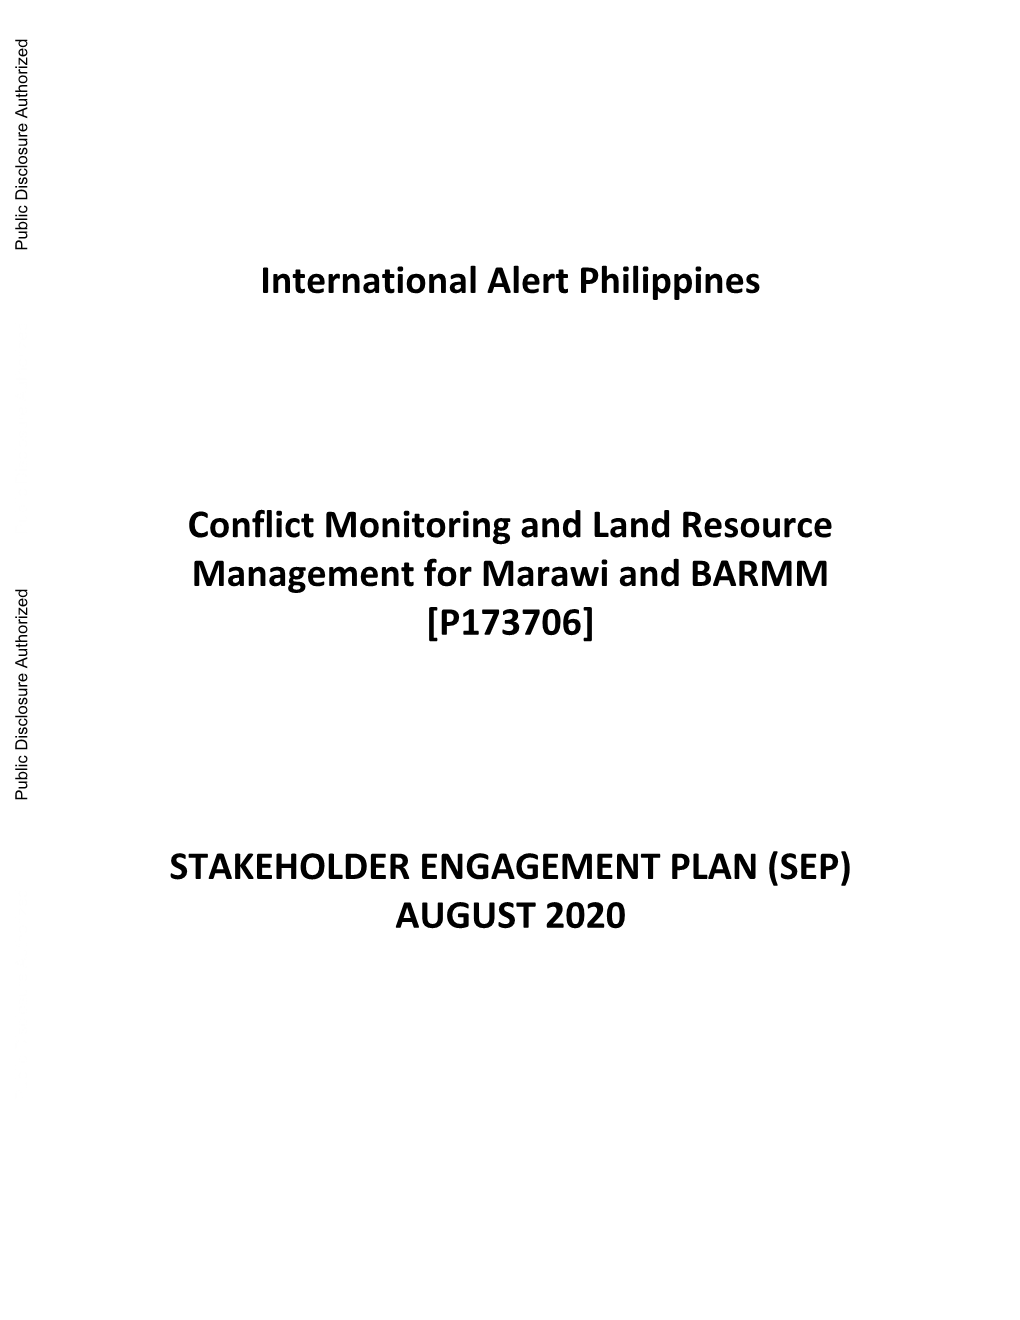 Stakeholder Engagement Plan (Sep) August 2020